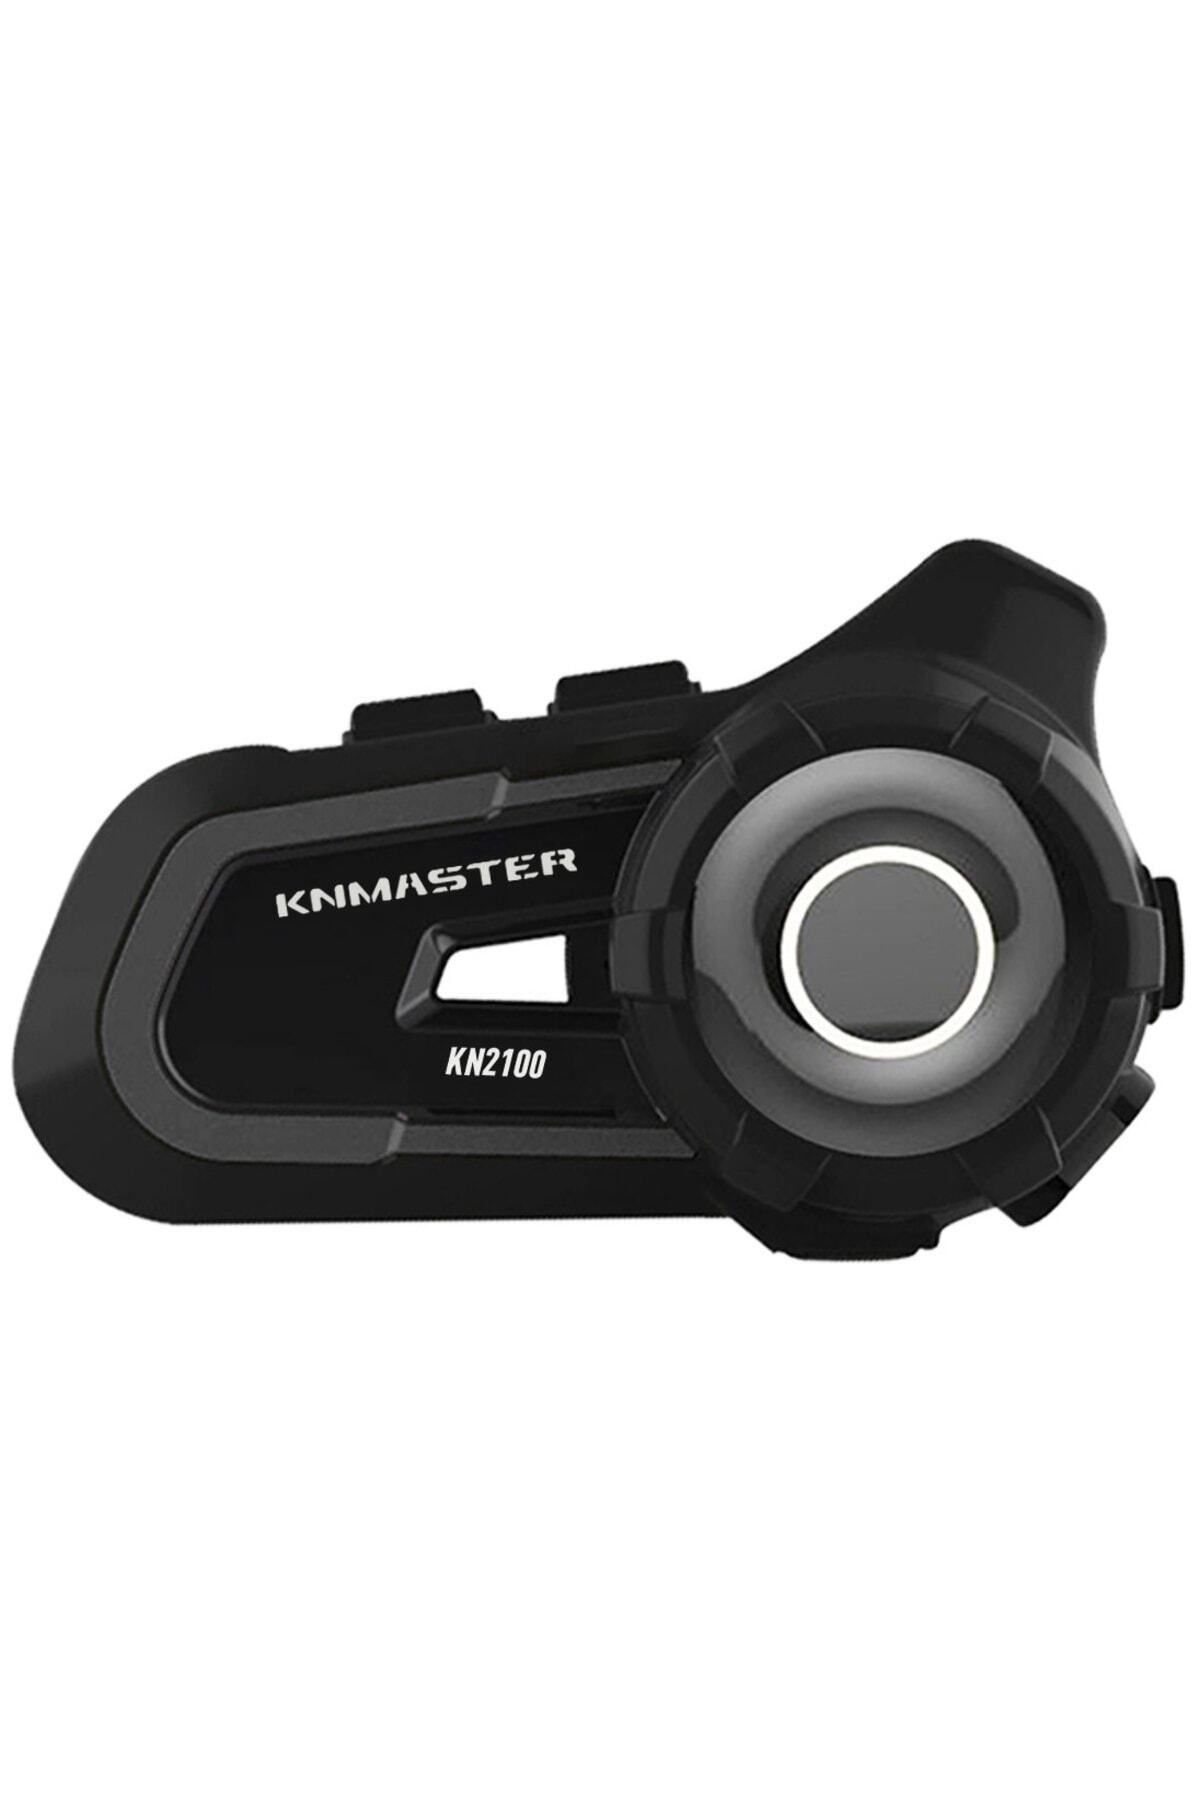 Knmaster Kn2100 Kask Interkom Bluetooth Intercom Kulaklık Seti Siyah